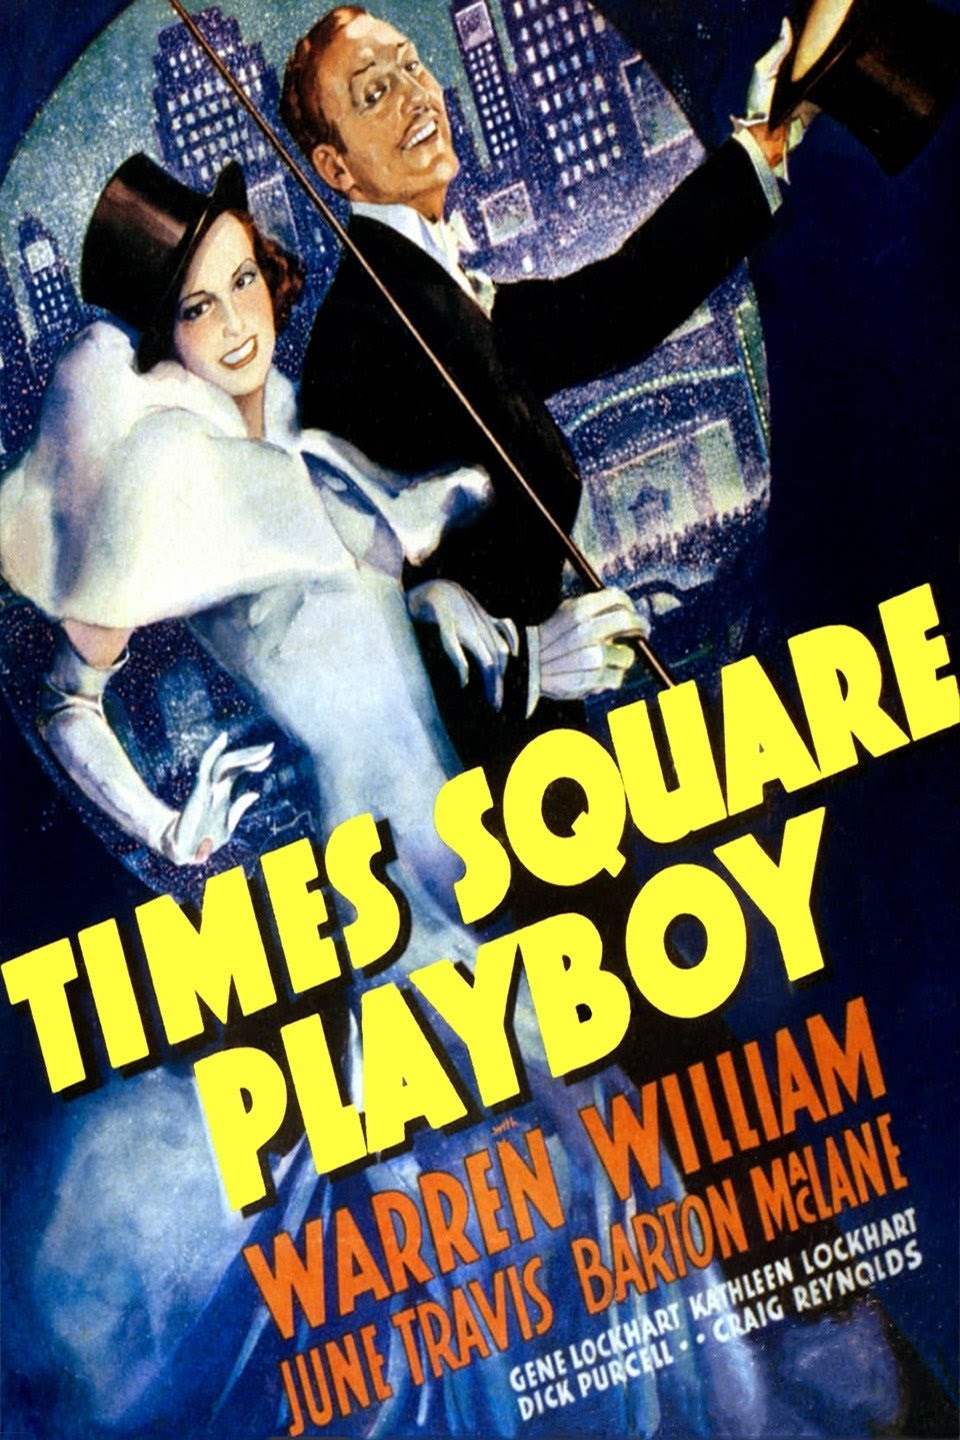 TIMES SQUARE PLAYBOY (1936)